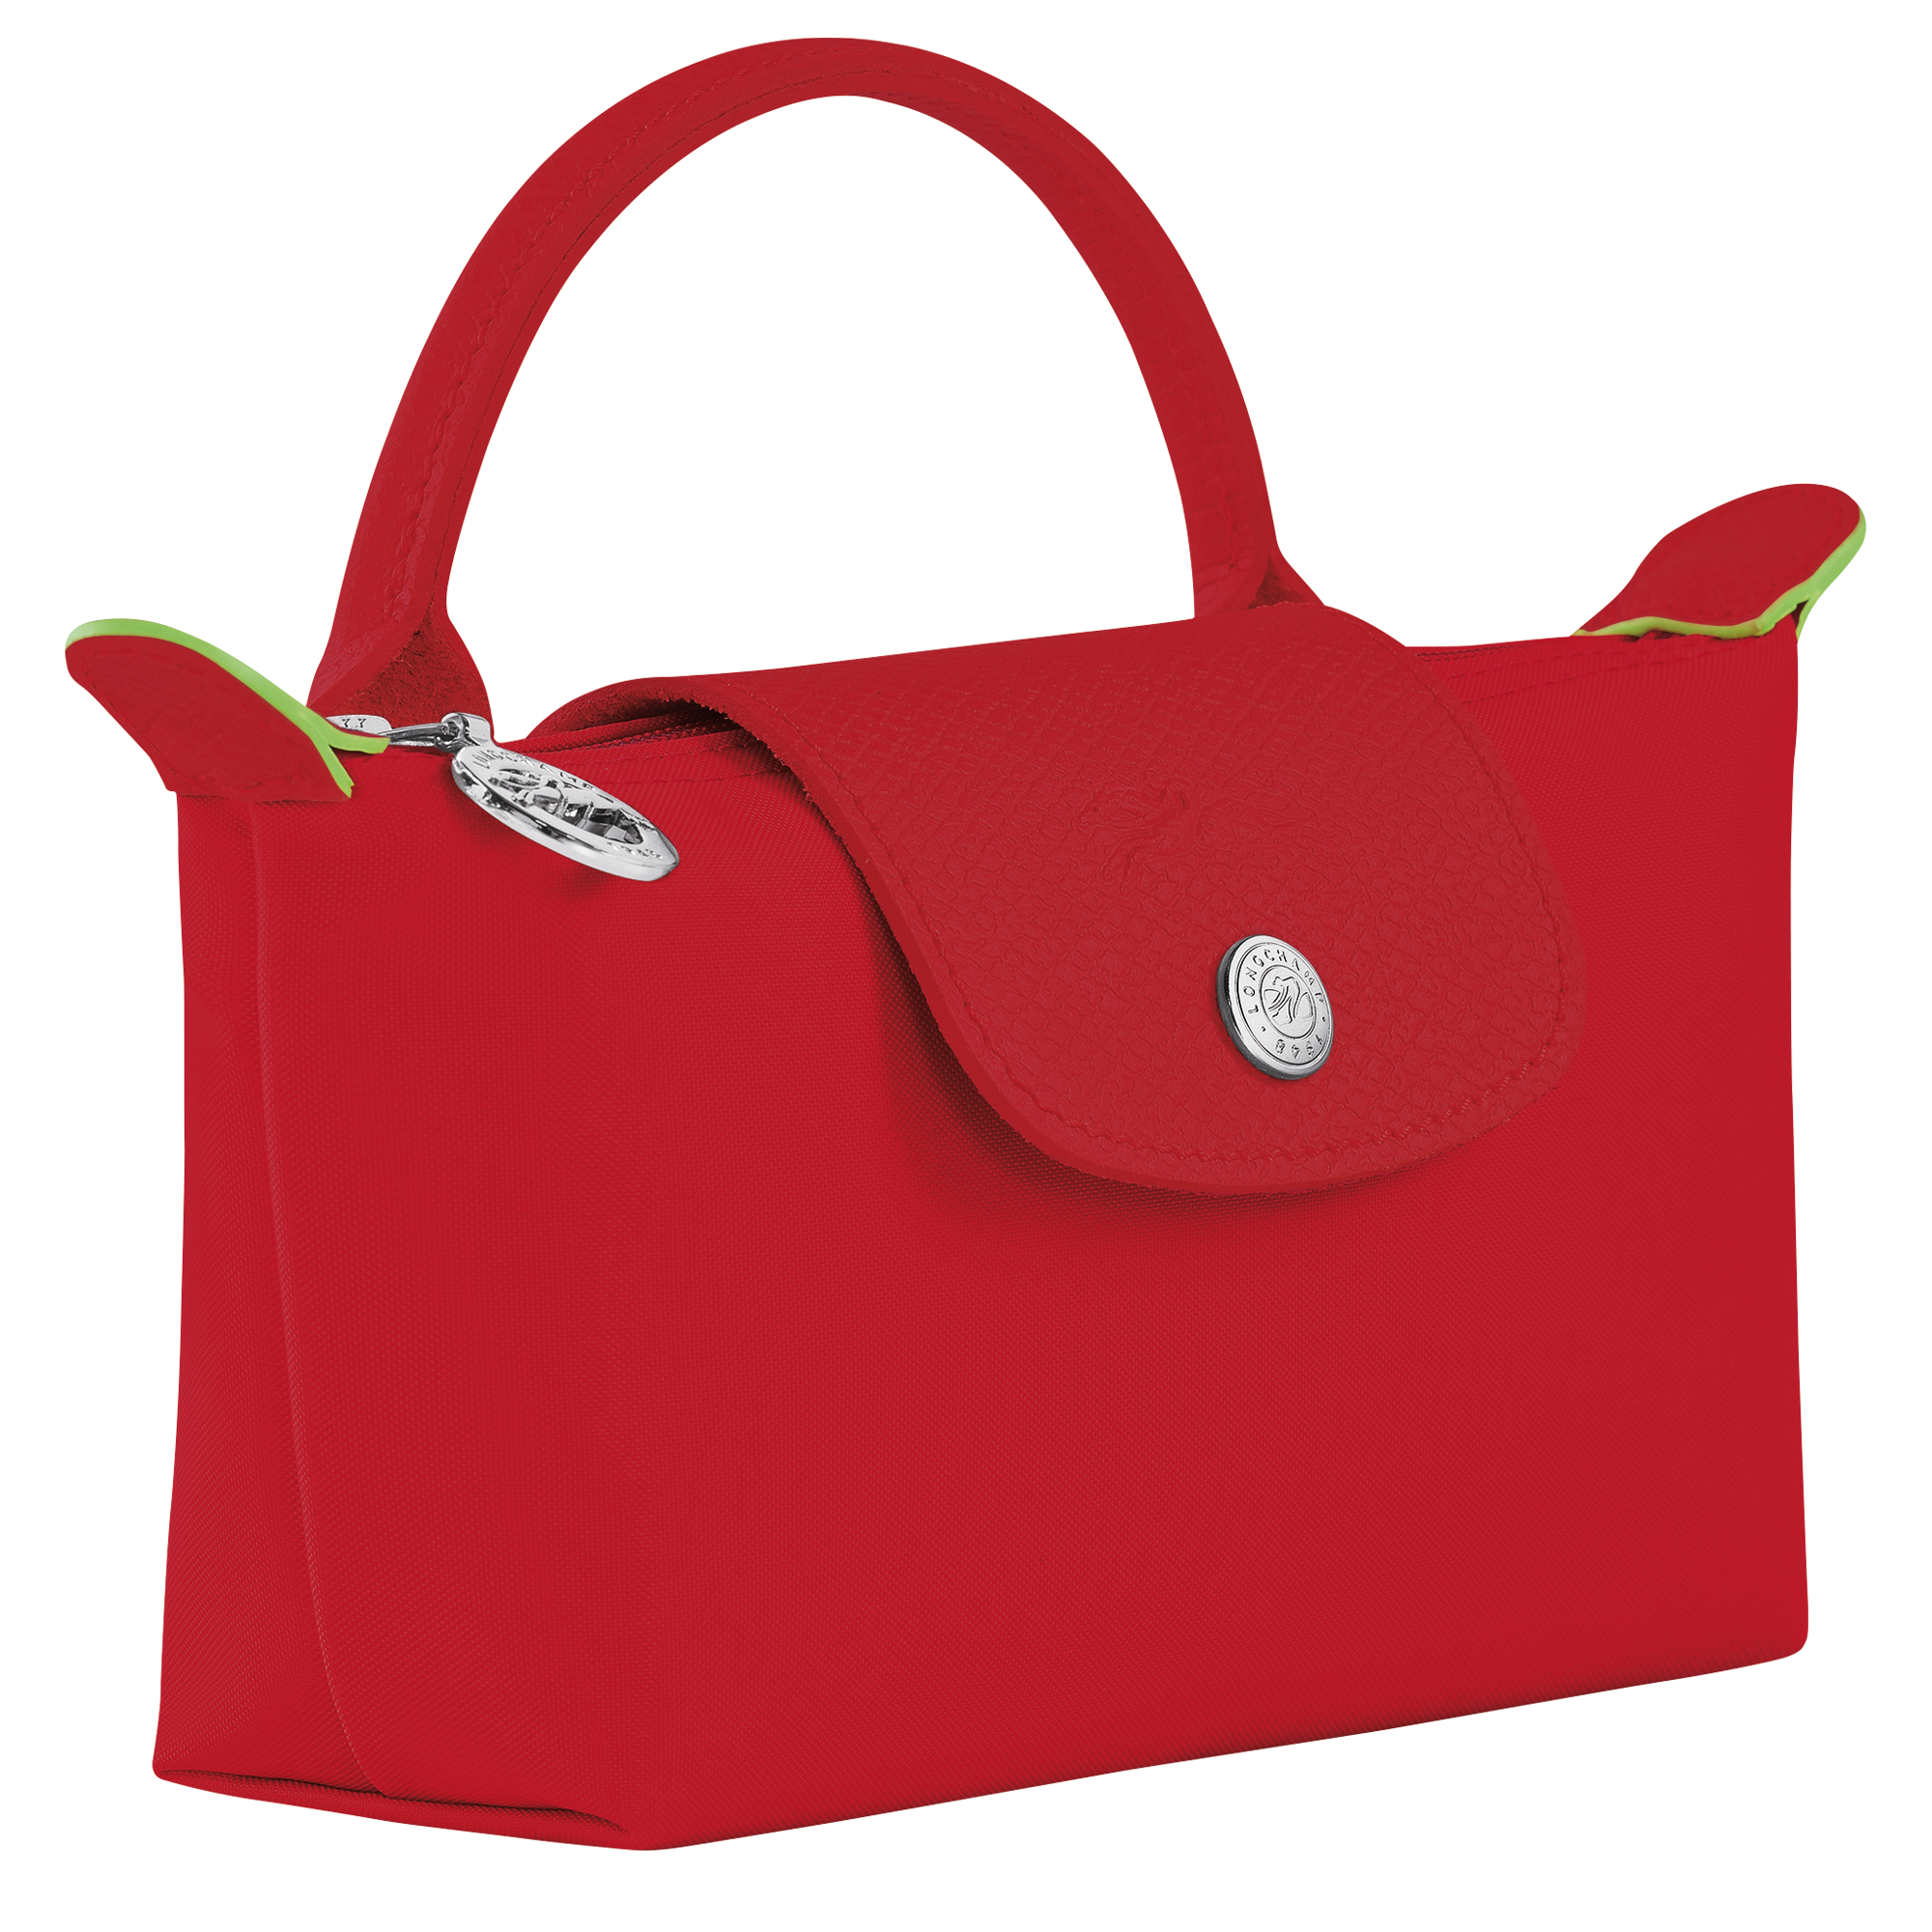 Le Pliage Green 化妆包, 鲜红色